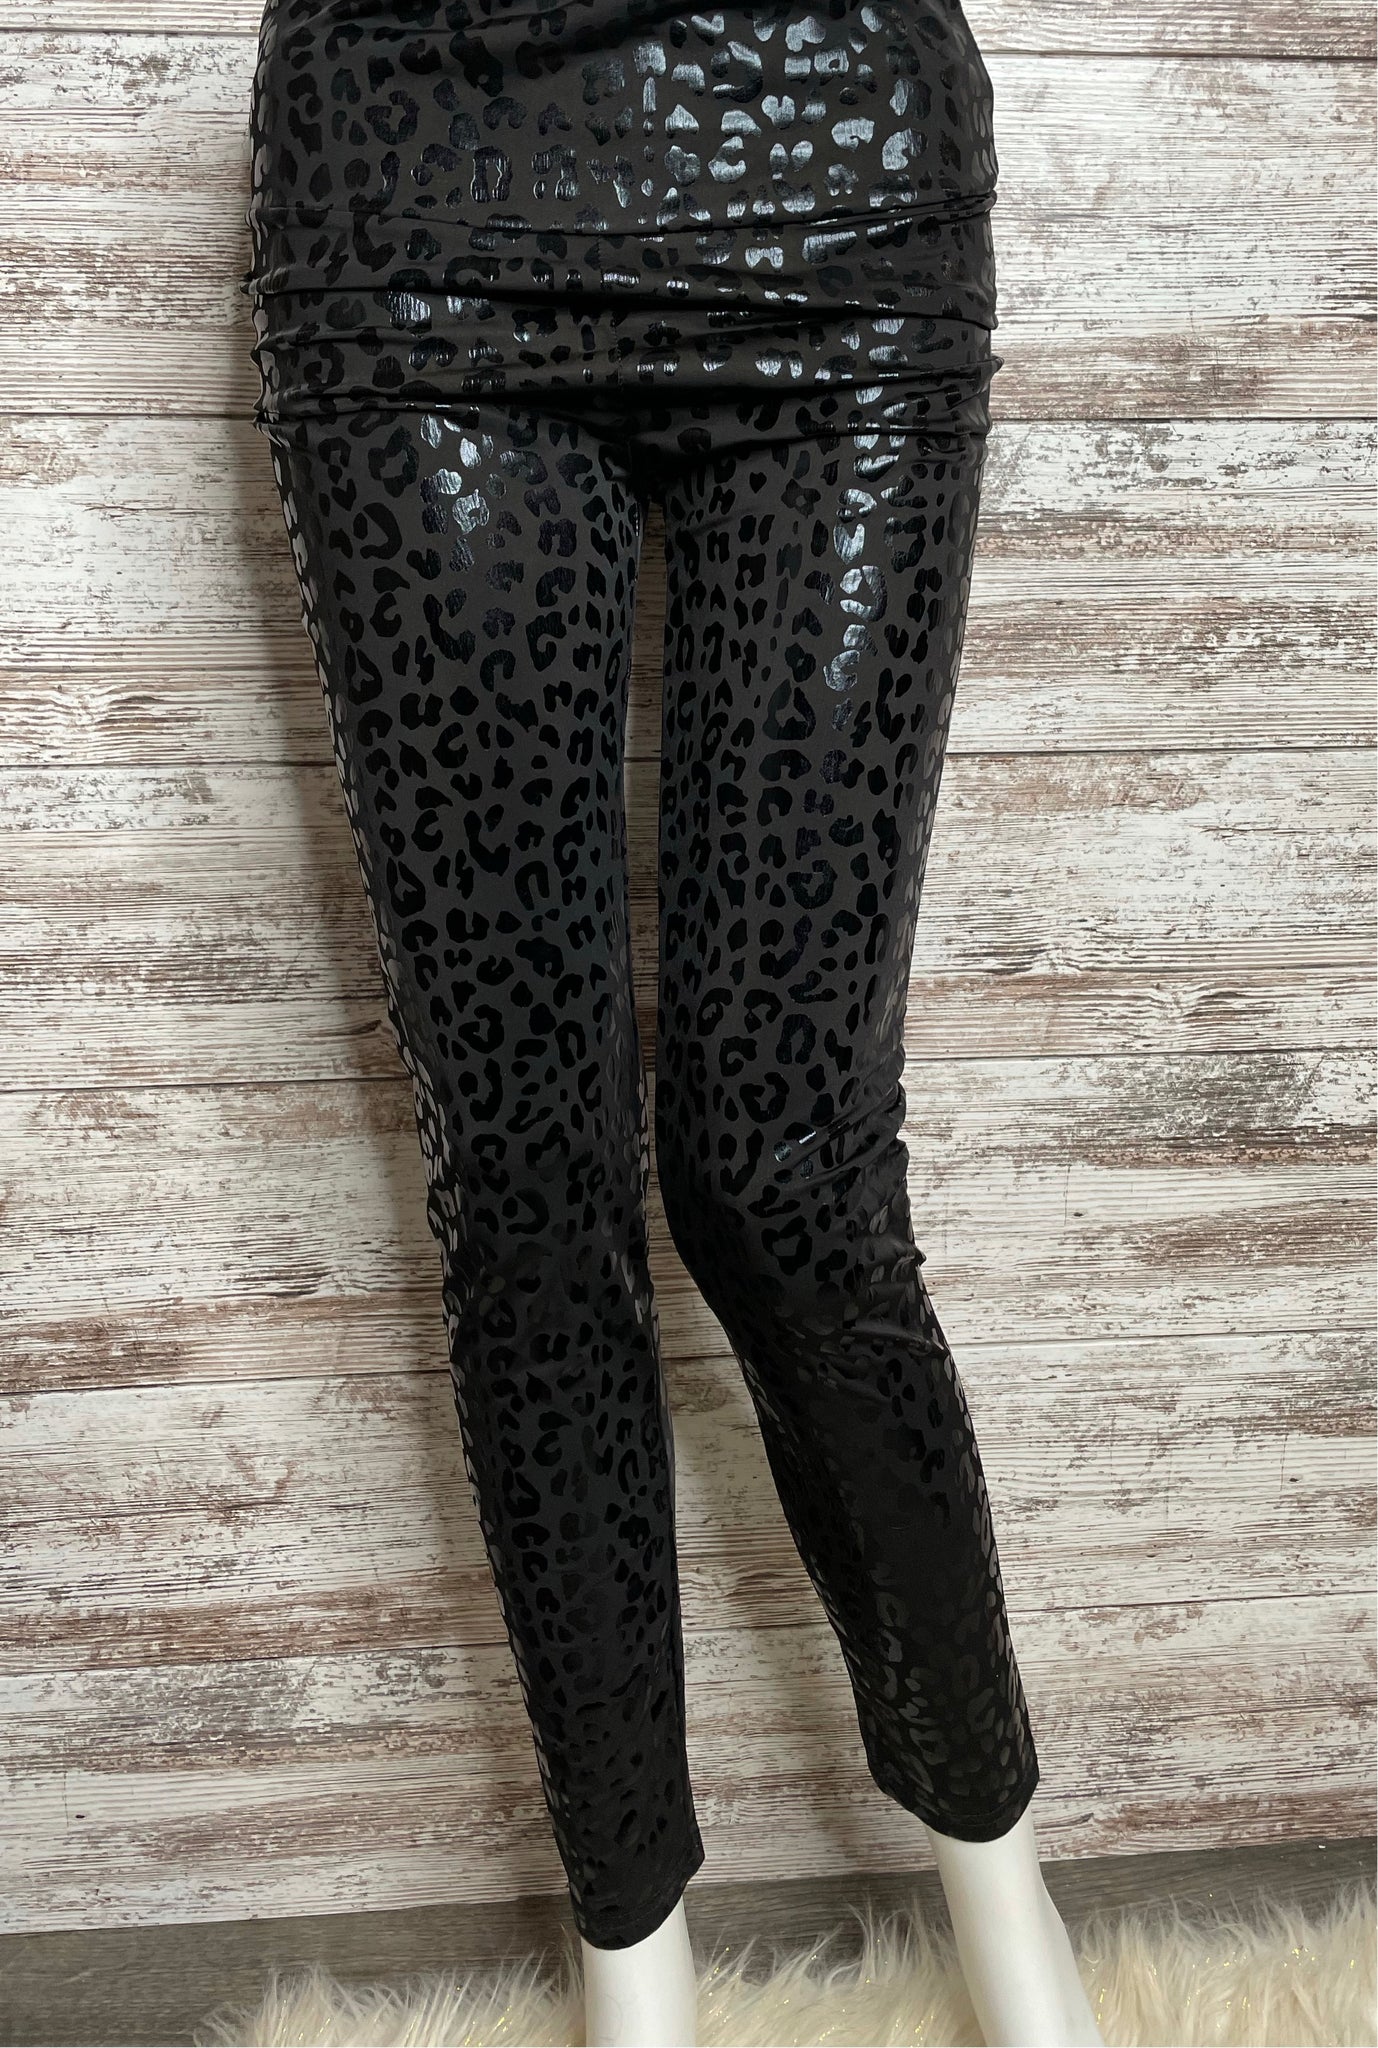 Black Leopard Print Leggings